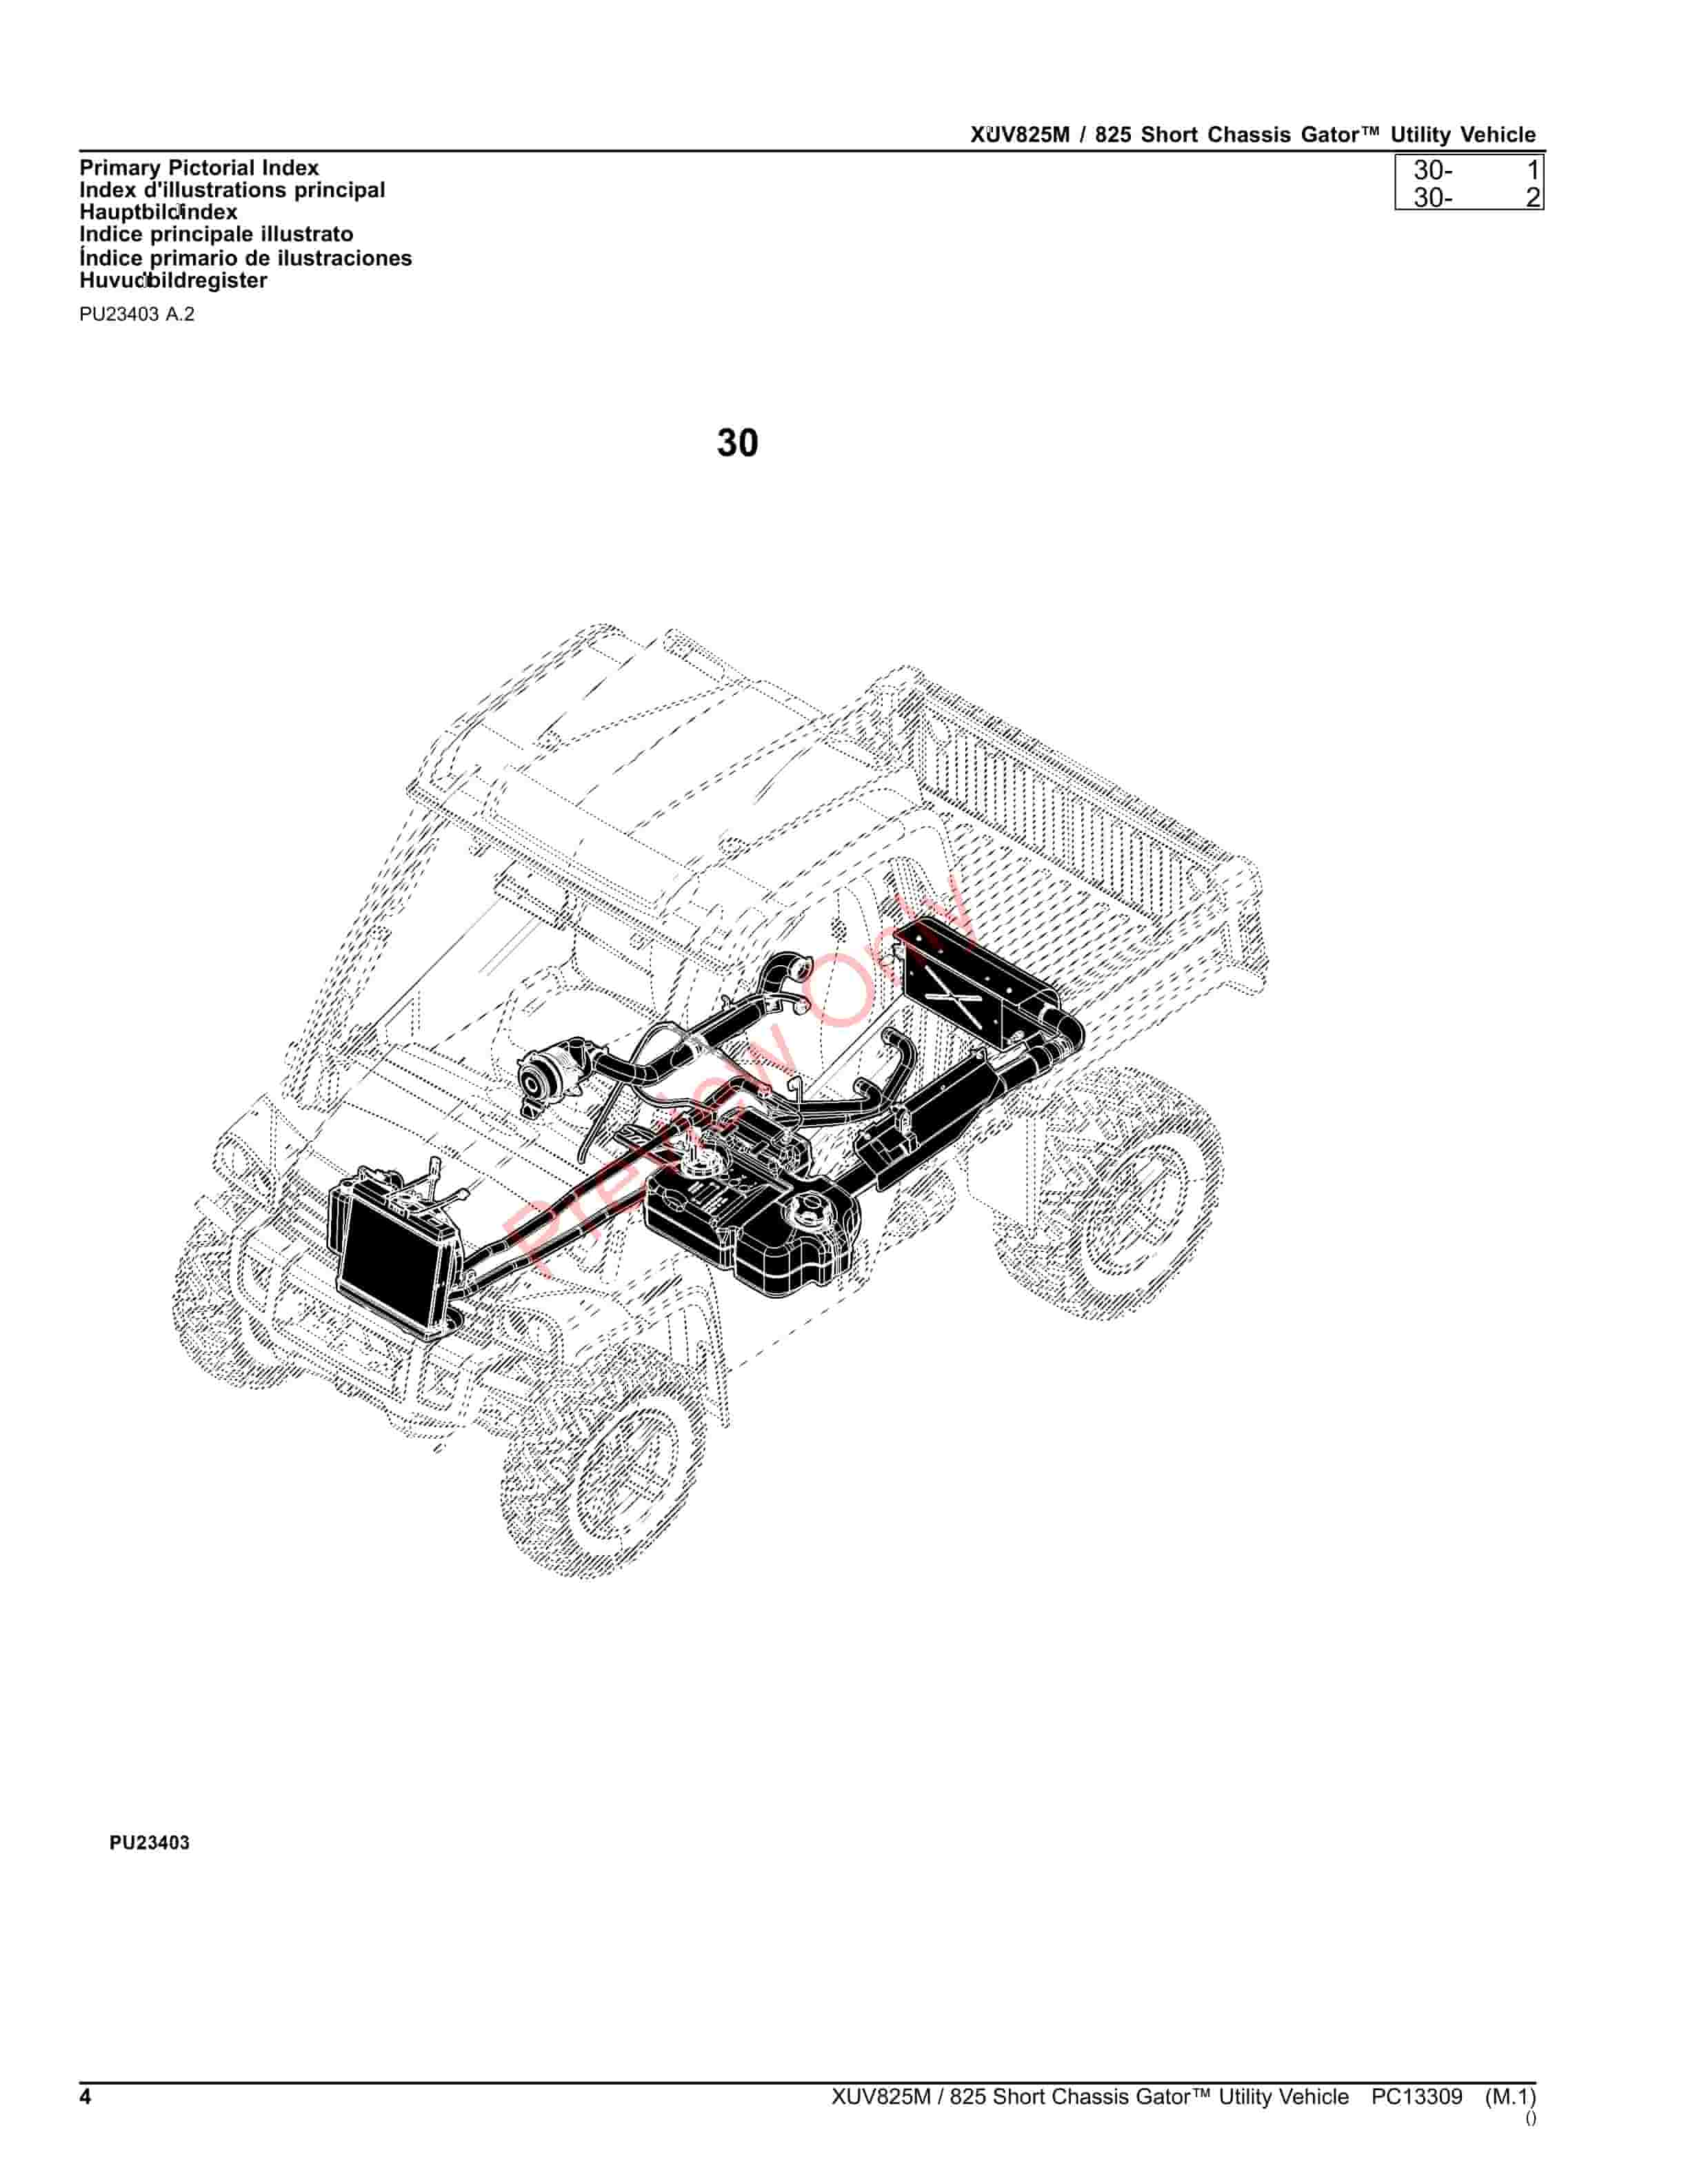 John Deere XUV825M 825 Short Chassis Gator Utility Vehicle Parts Catalog PC13309 10SEP23-4